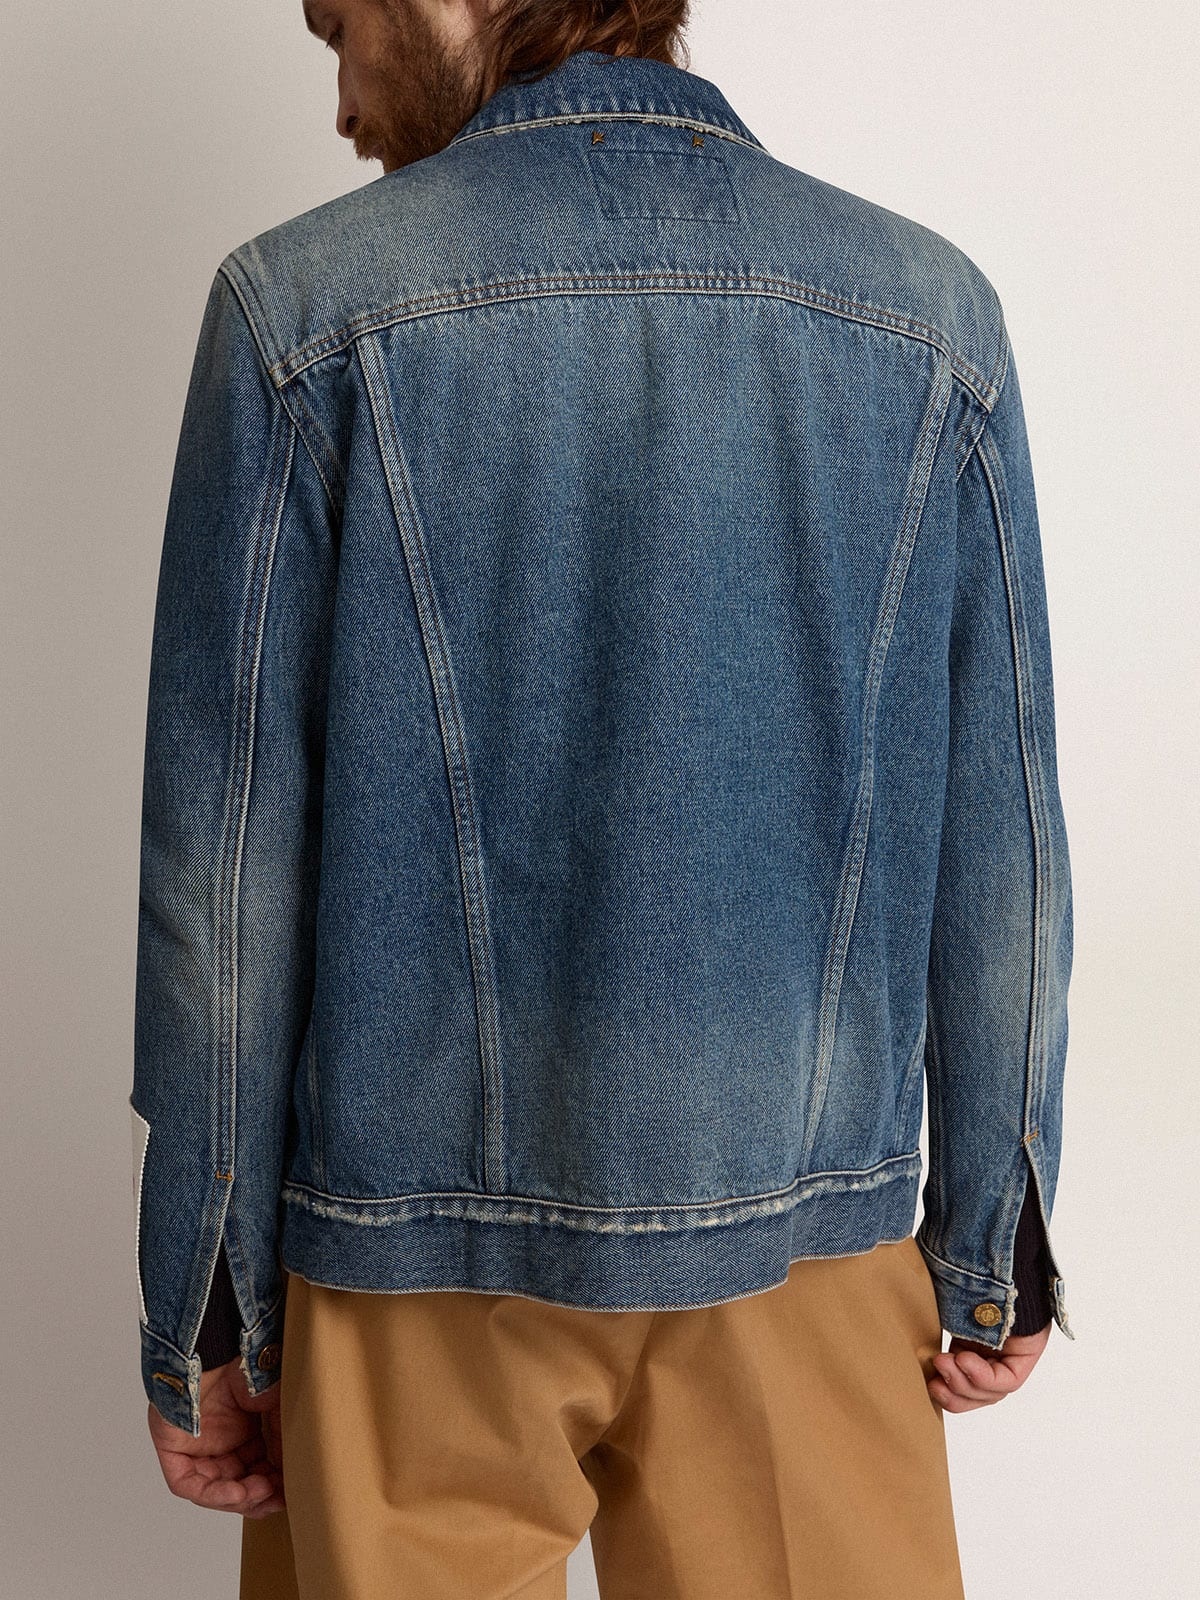 Men's denim jacket with medium wash - 4